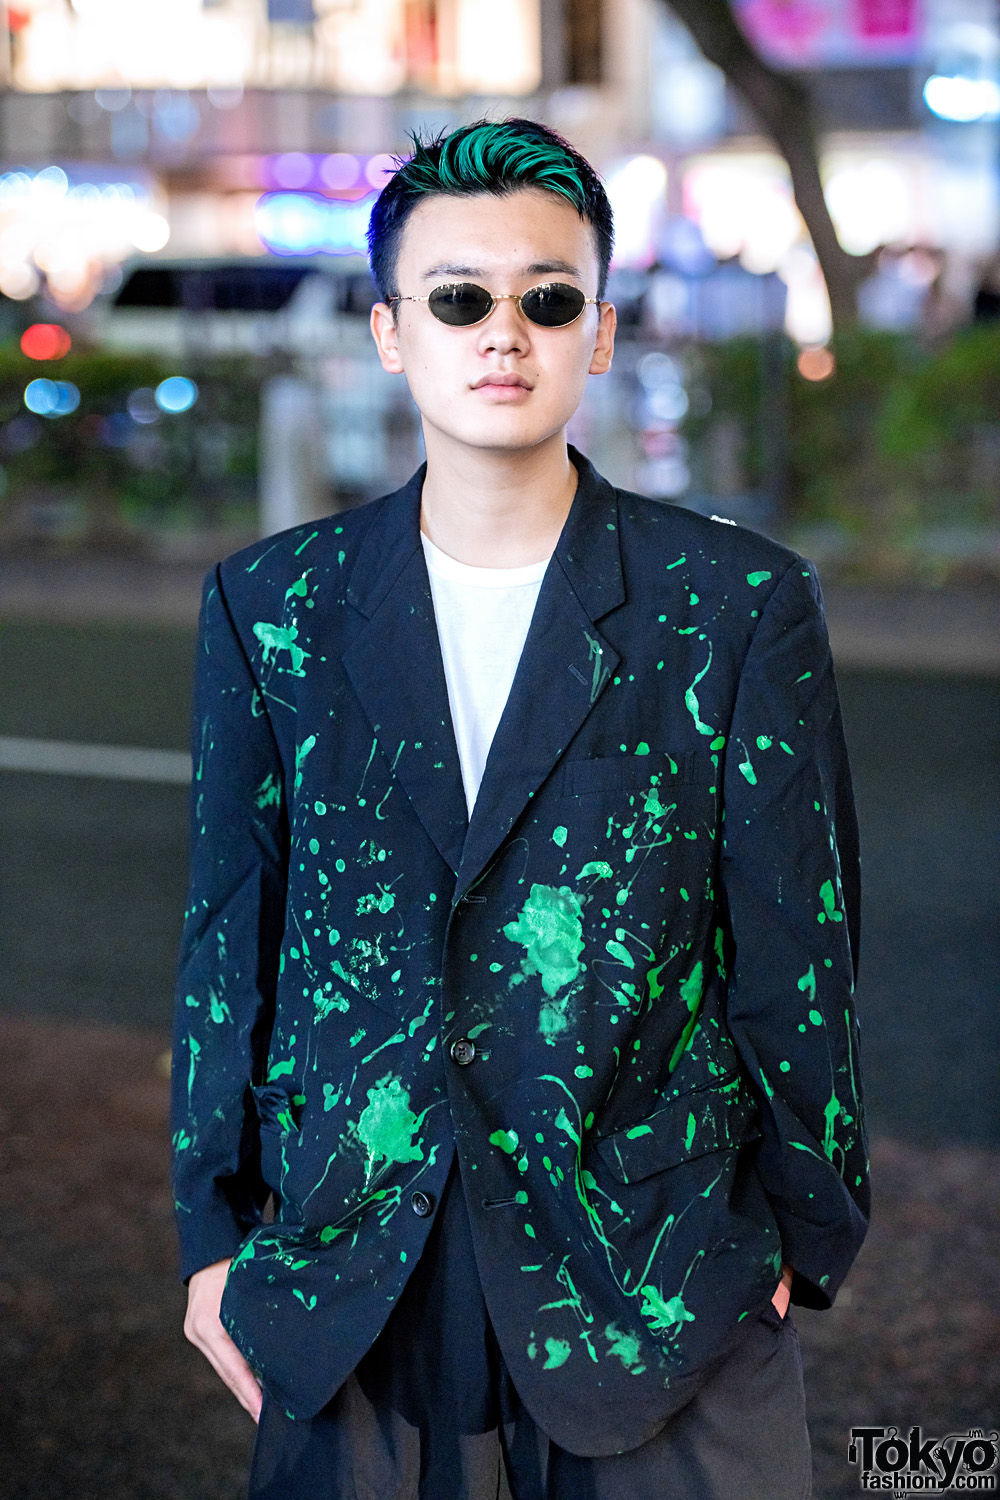 Issey Miyake Pleats Please Streetwear Style in Harajuku – Tokyo Fashion